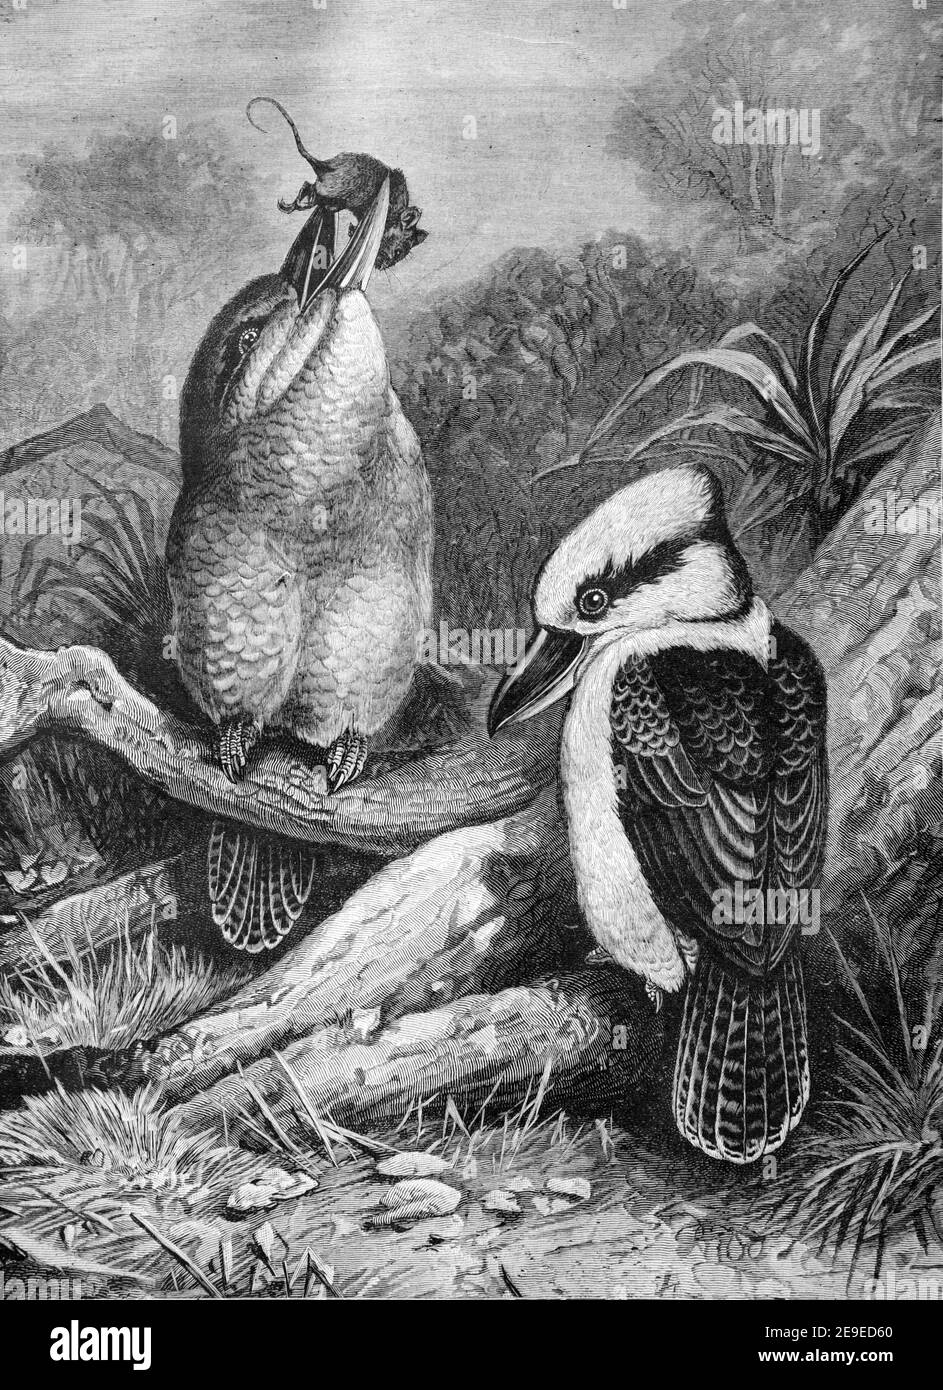 Pair of Kookaburras, Dacelo species, possibly Laughing Kookaburra, Dacelo novaeguineae, one Eating Mouse Australia or New Guinea 1898 Vintage Illustration or Engraving Stock Photo